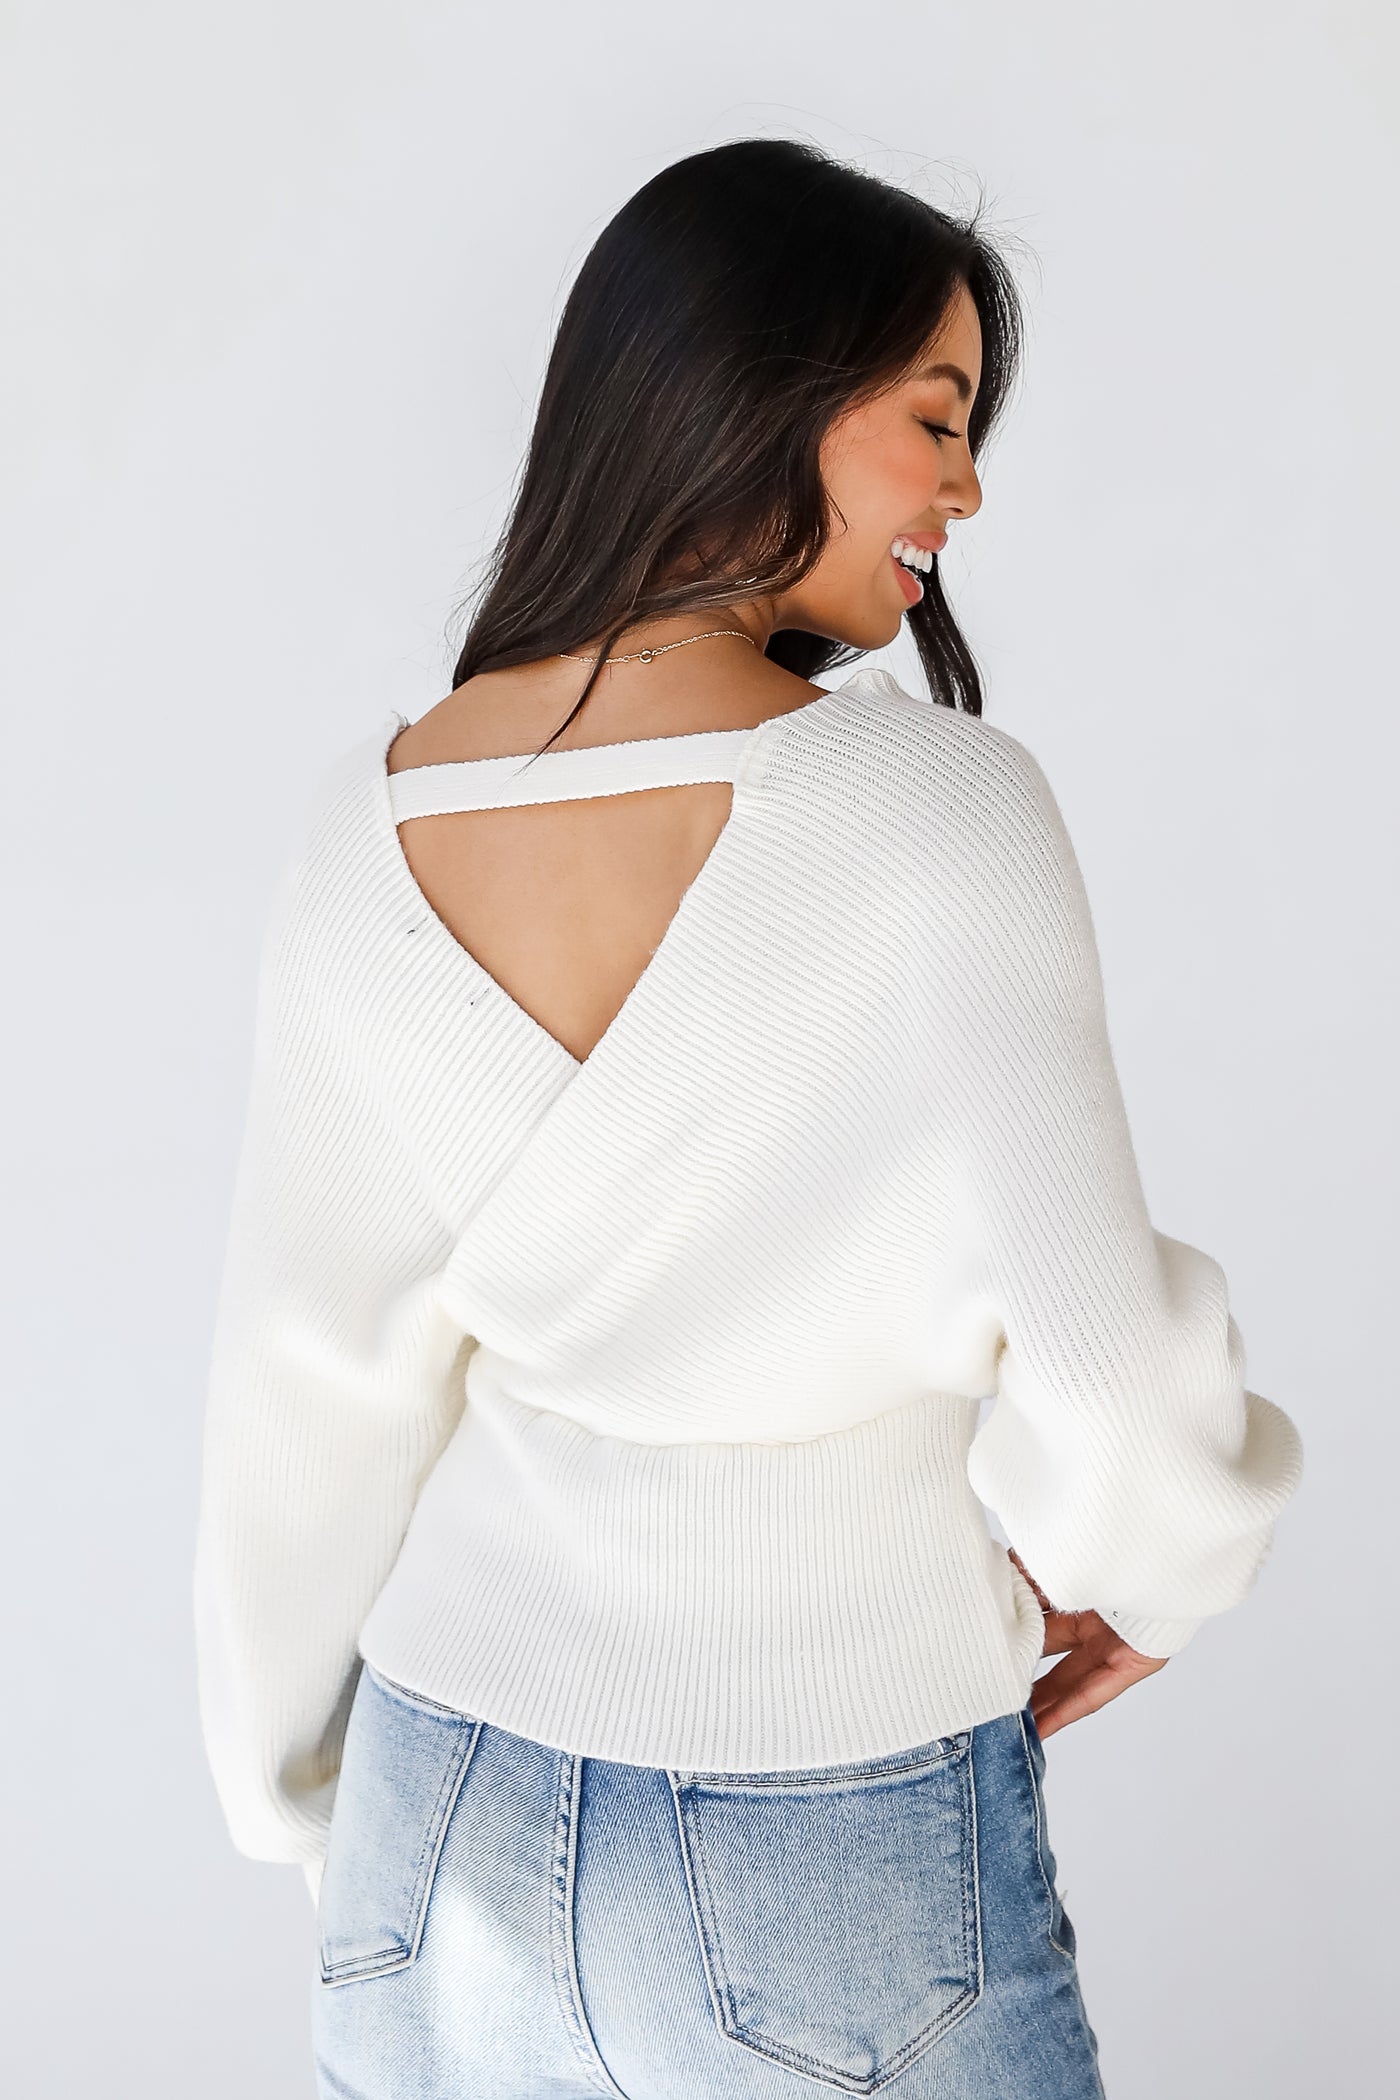 Surplice Sweater in white back view